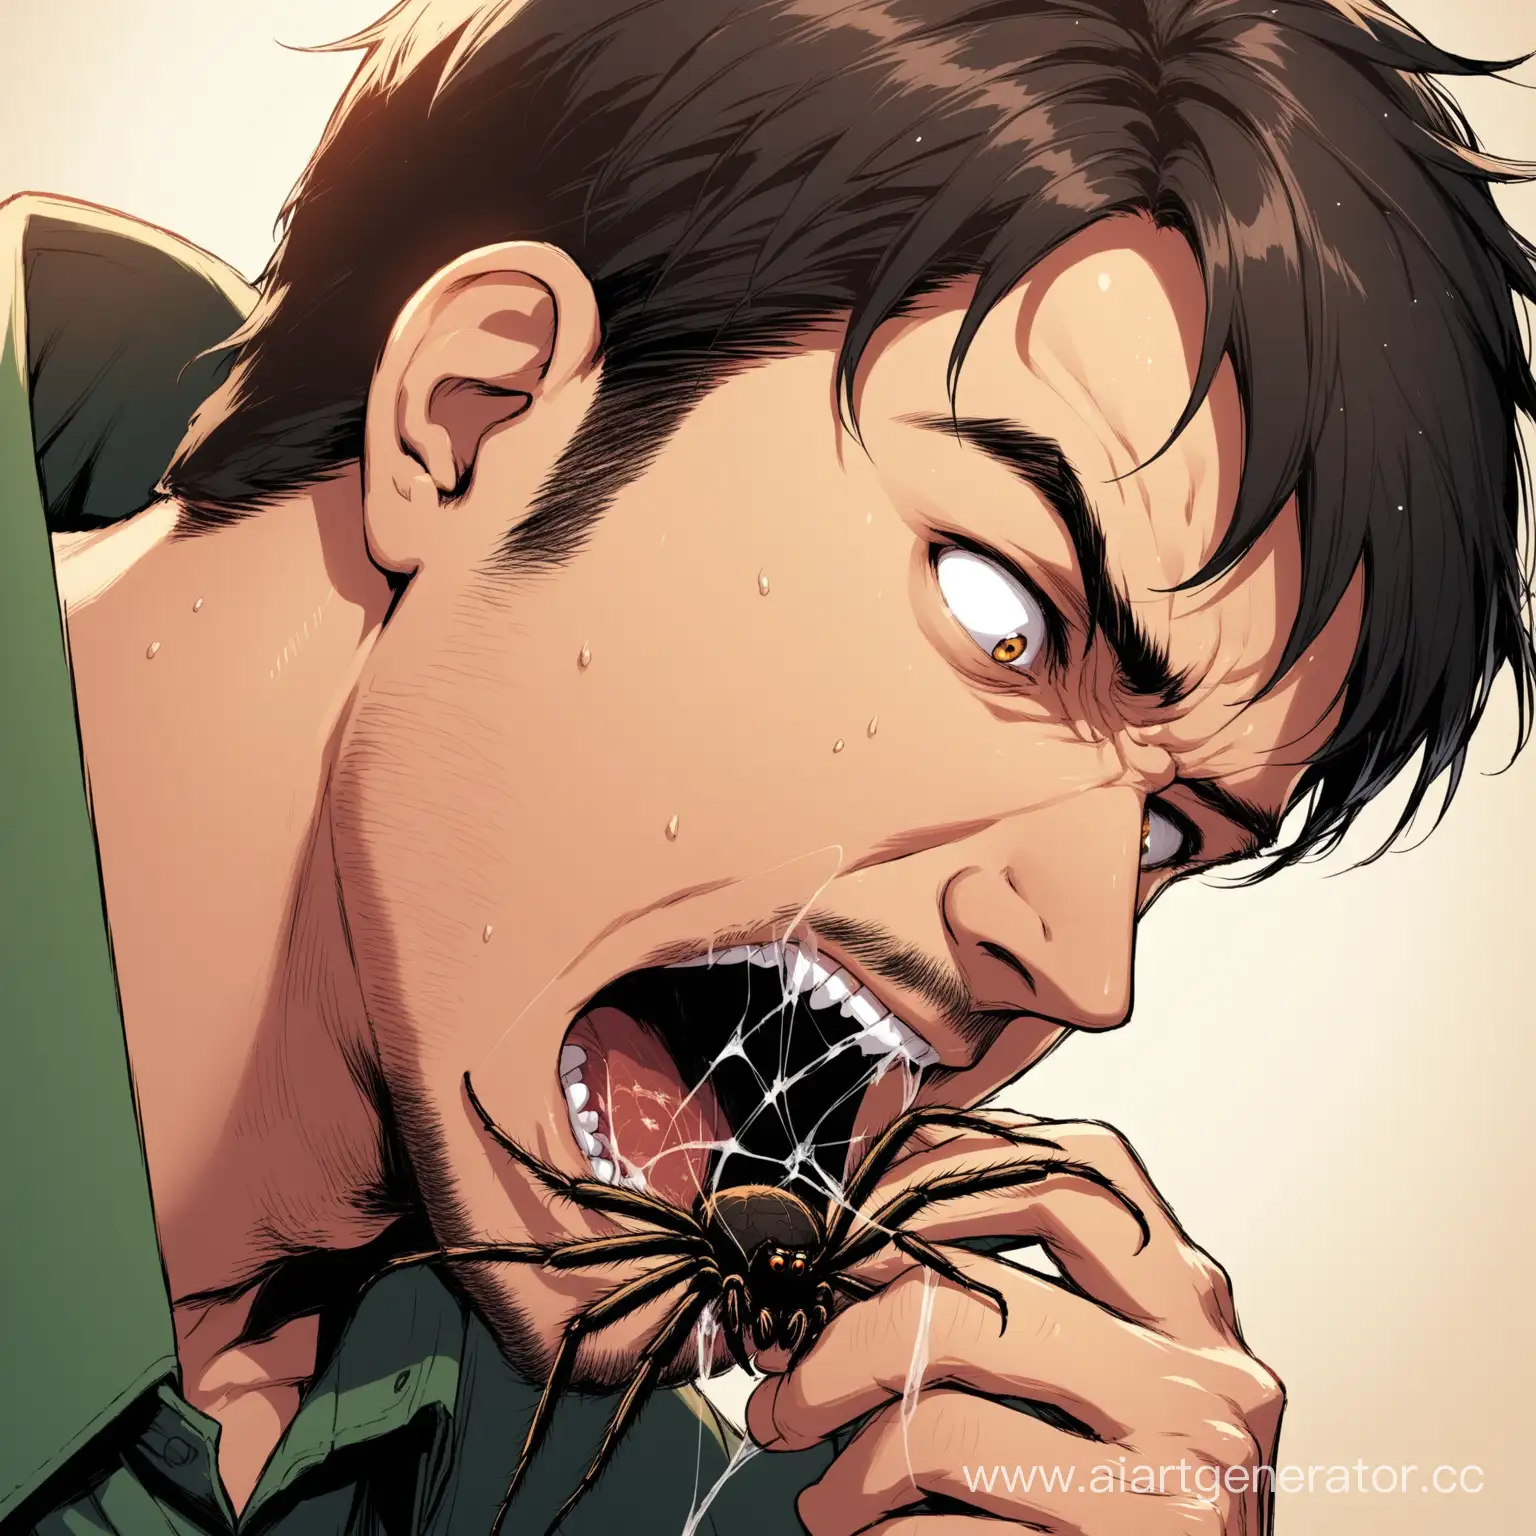 Man-Eating-Spider-Unsettling-Act-of-Ingesting-Arachnid